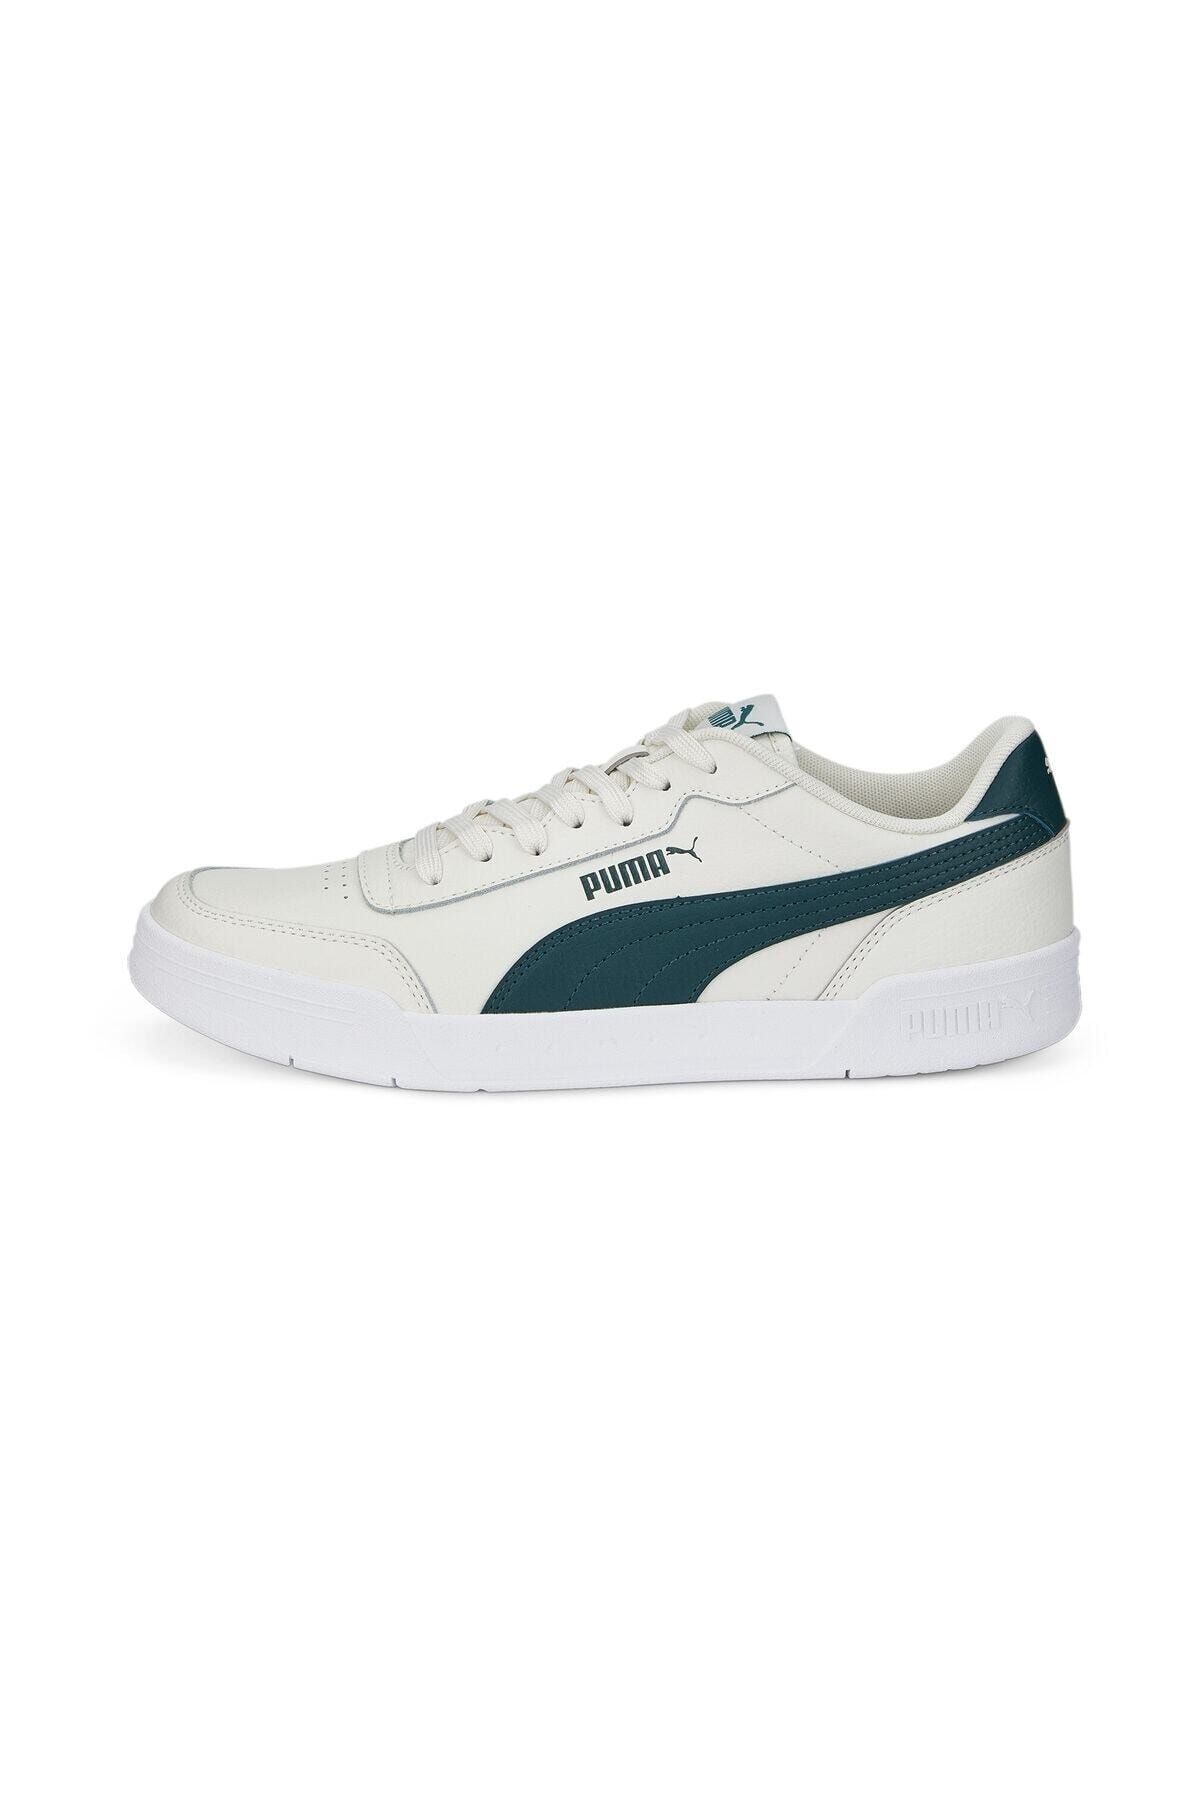 Puma Unisex Sneaker - Caracal Vaporous Gray-Varsity Green - 36986339